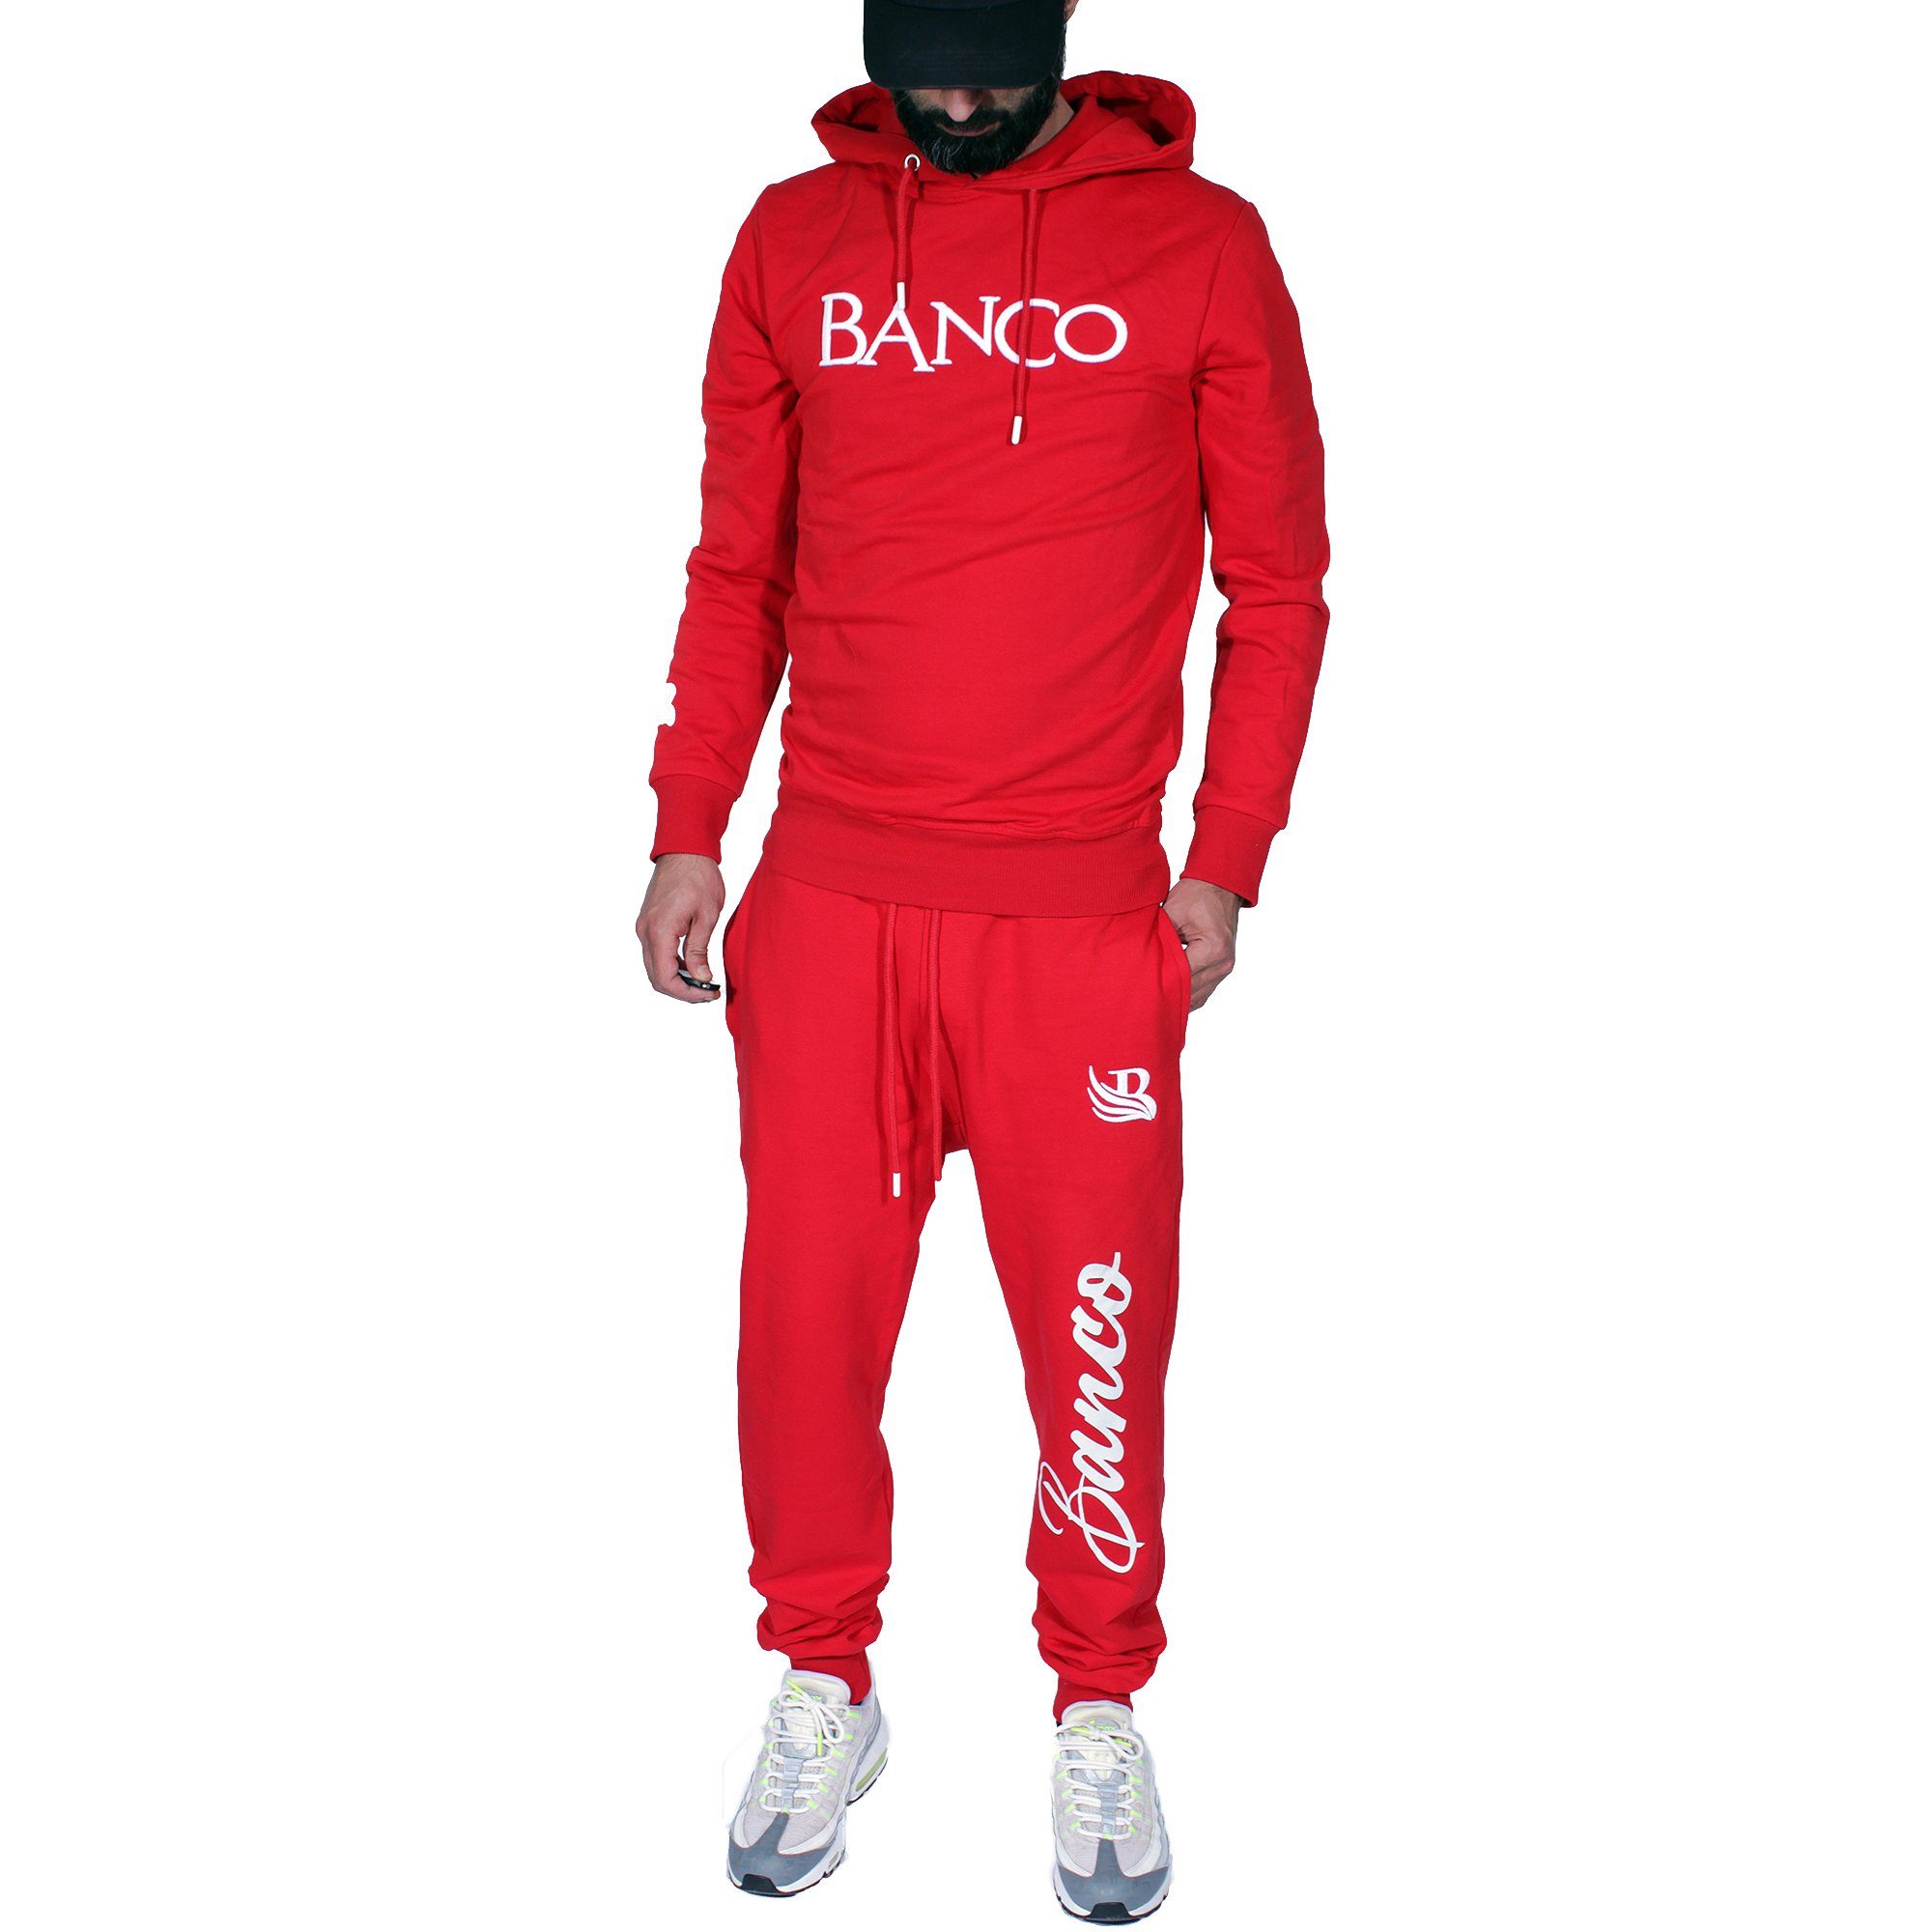 Banco Freizeitanzug Banco Sportanzug mit Logo Streetwear Outdoor Fitness Herren, Mit Kapuze